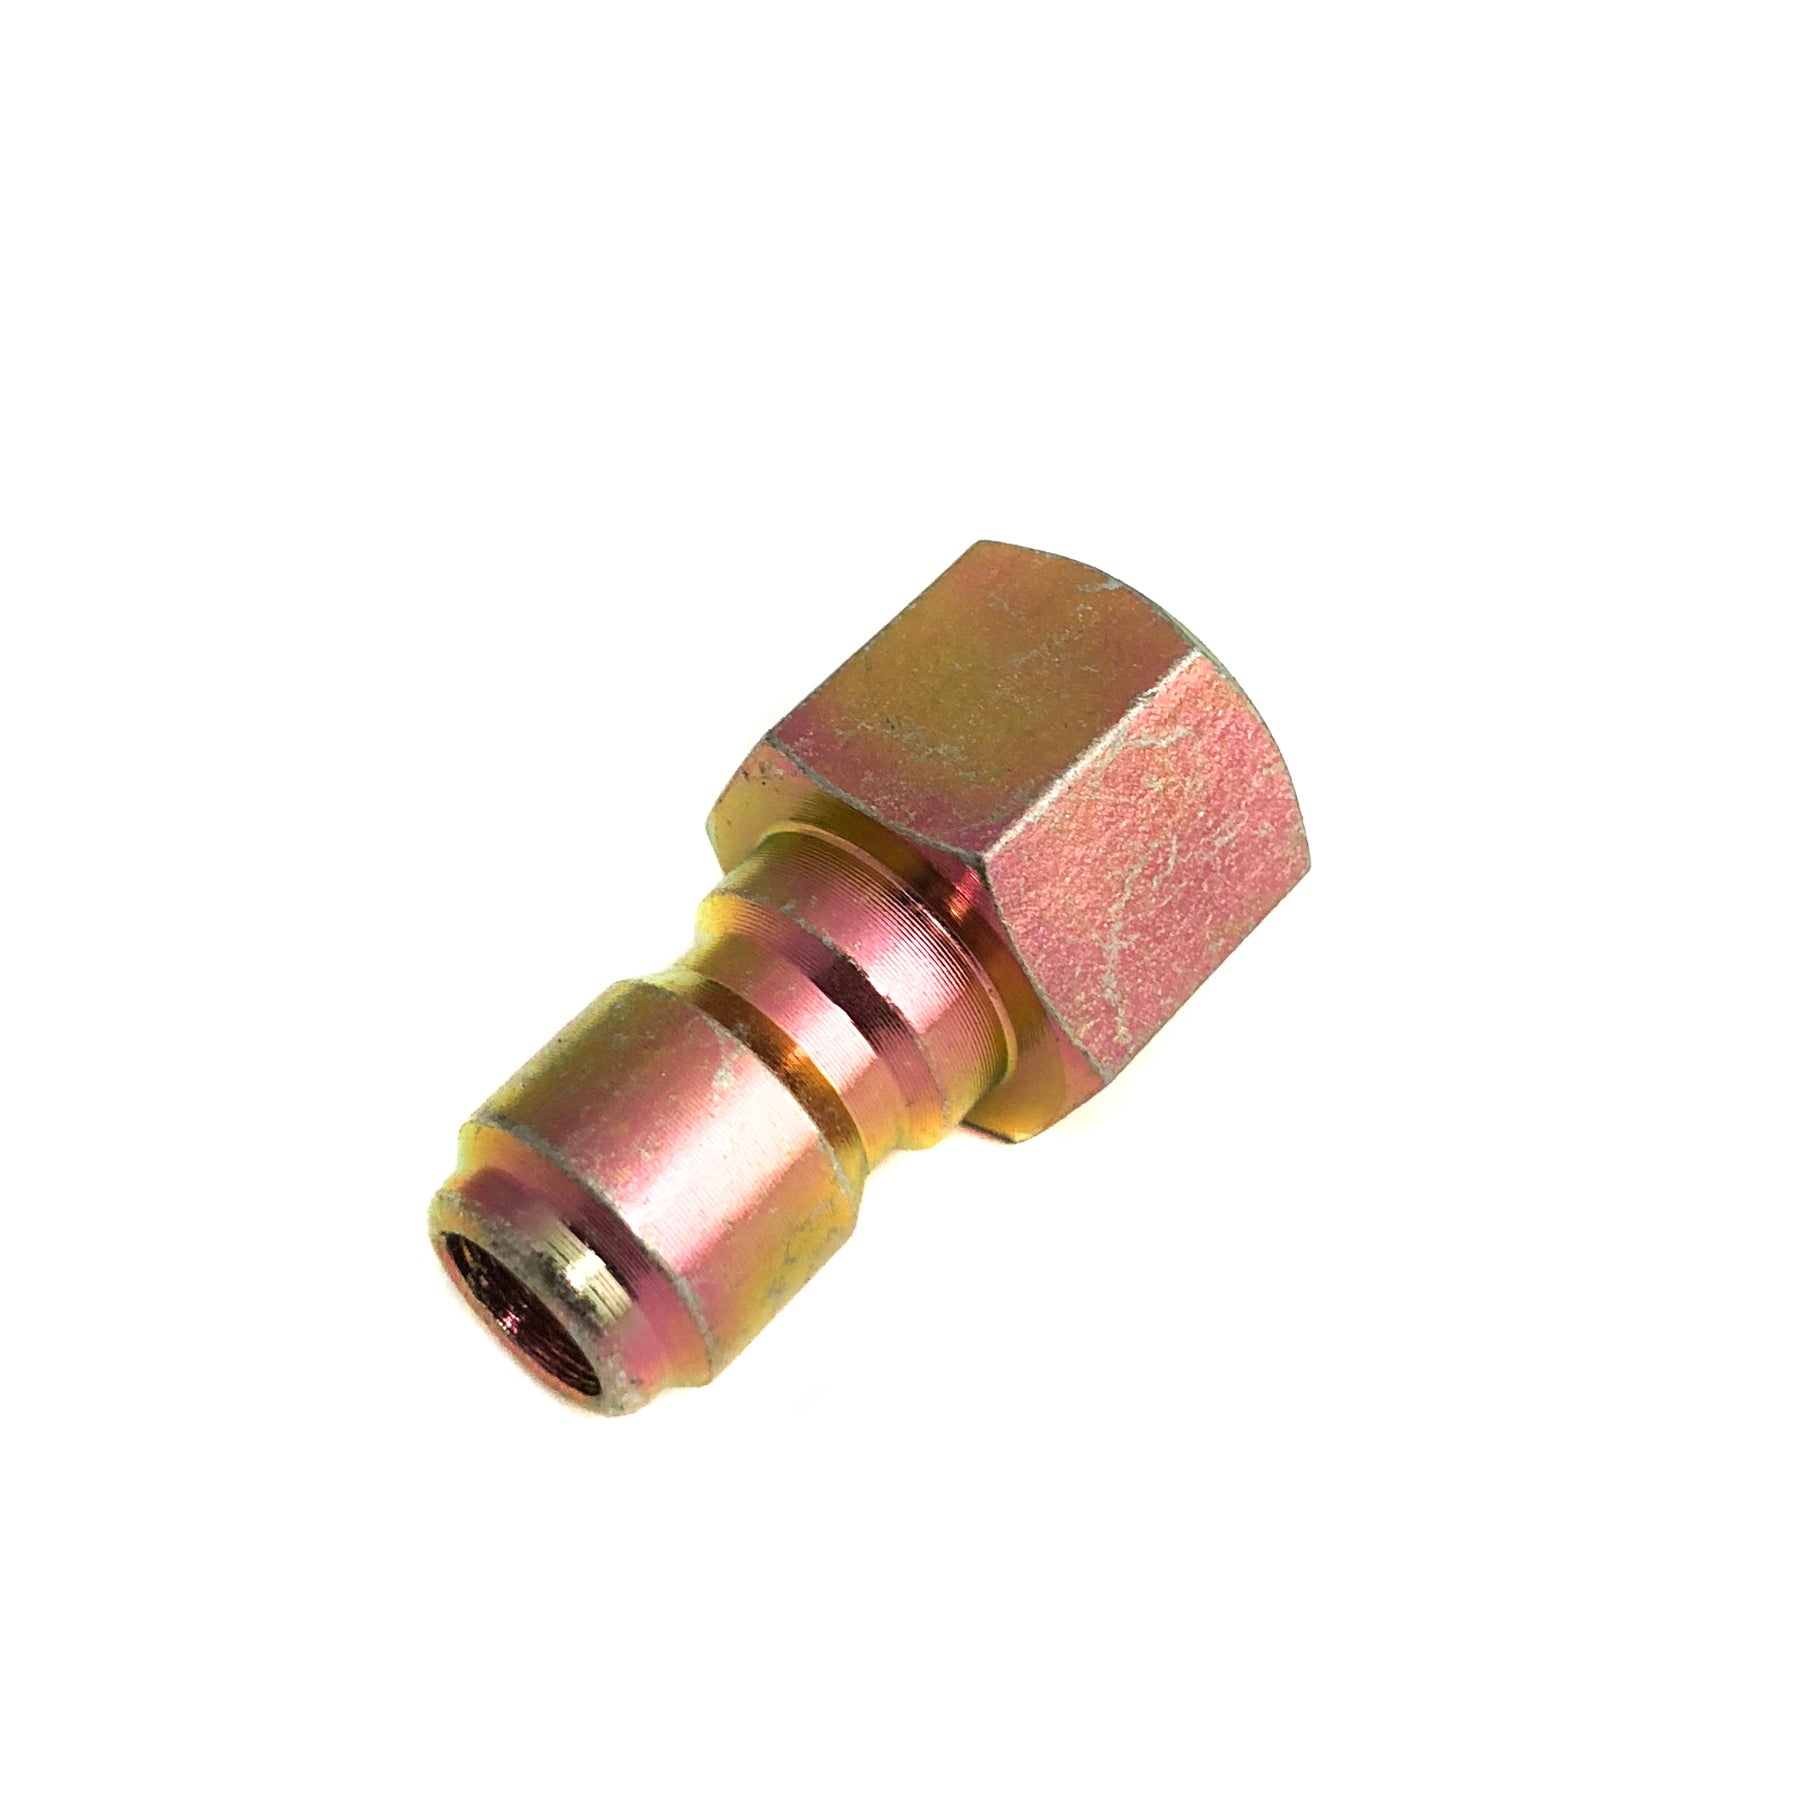 Pressure washer fitting brass 3-8 QD plug x 3-8 Female